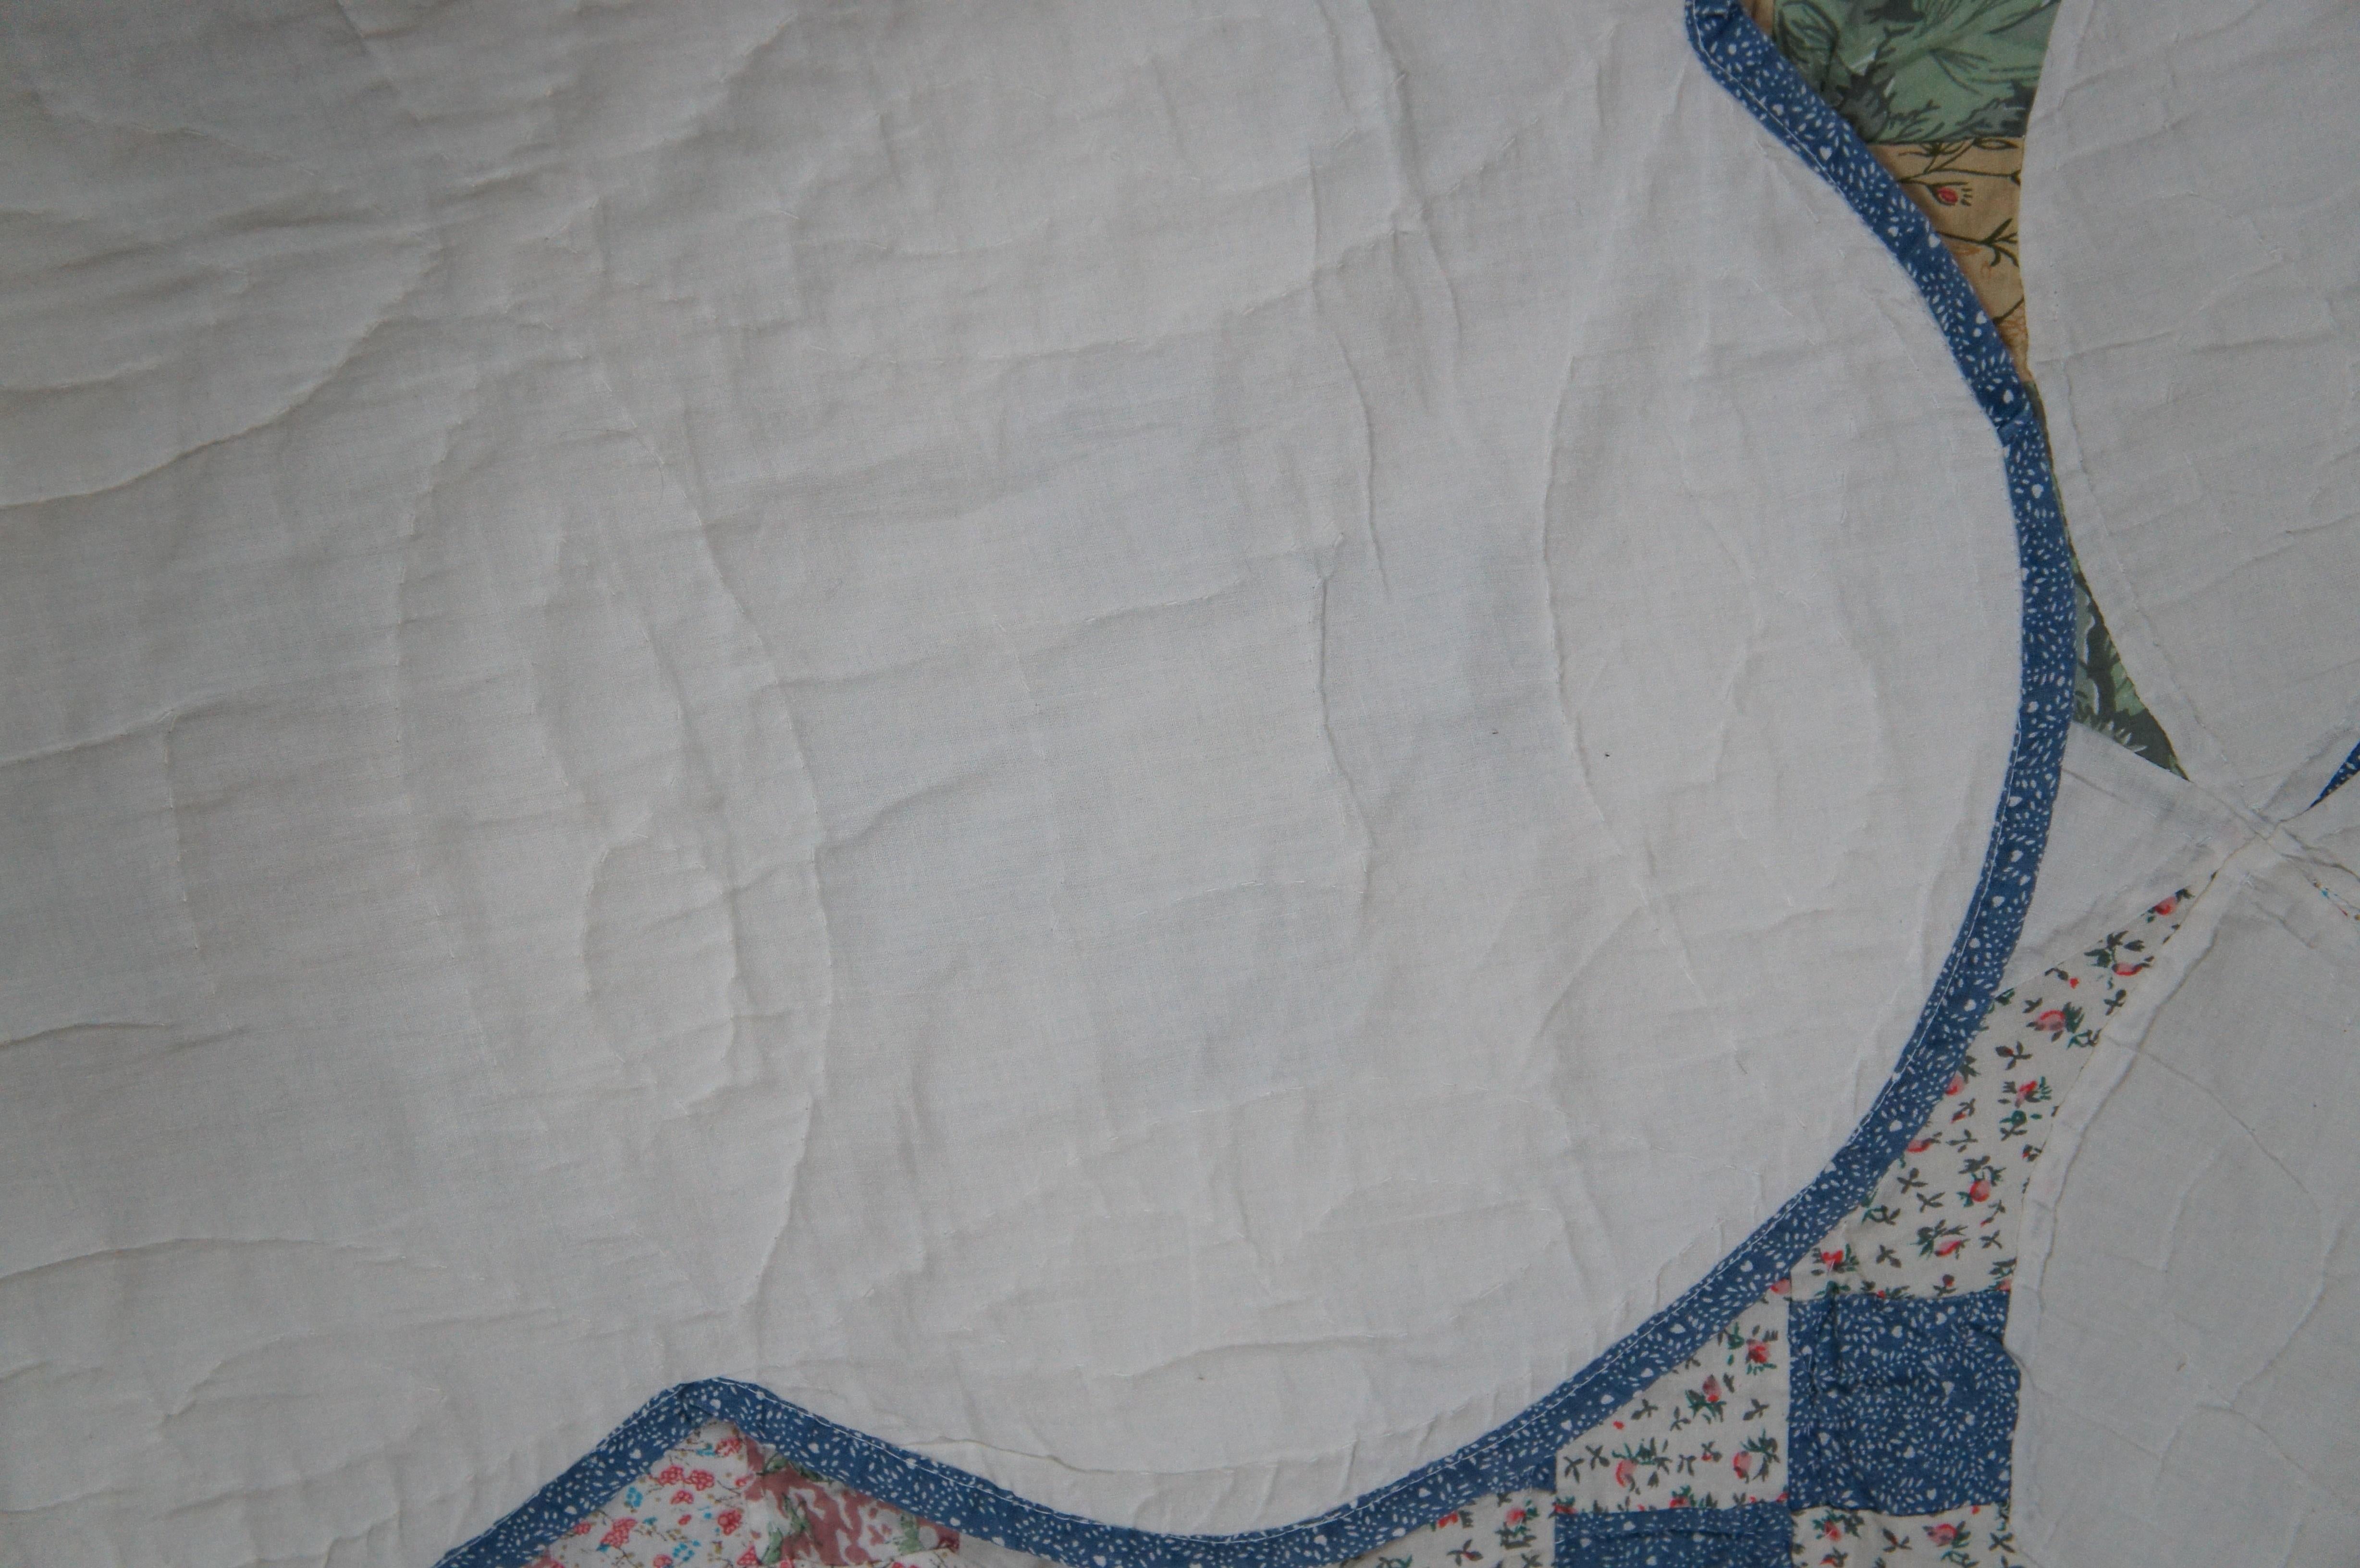 Neun Patch Stitched Scalloped Geometrische gesteppte Deckendecke Bettspread 91